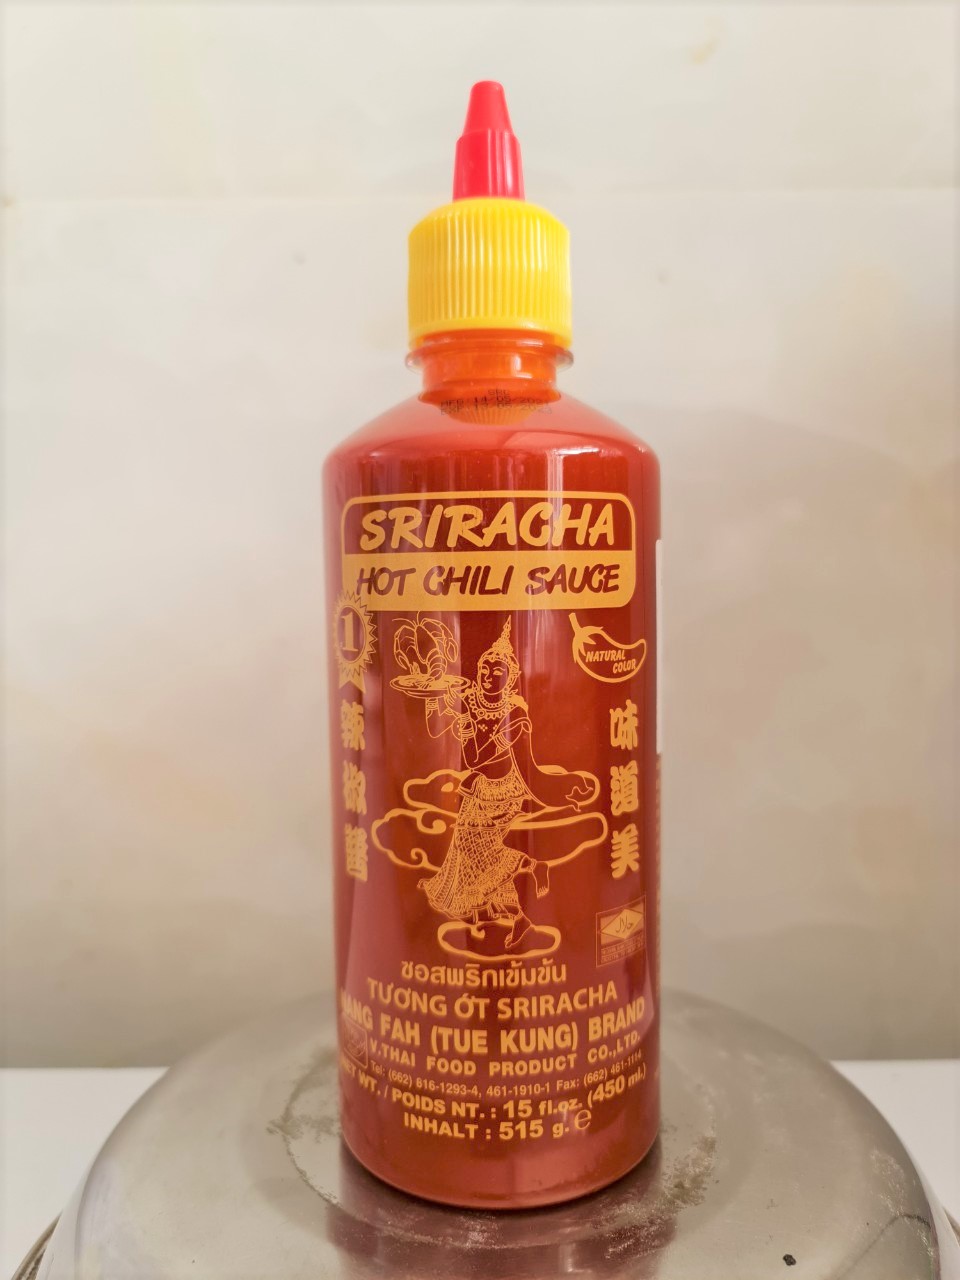 515g Tương ớt đỏ Nang Fah Thailand TUE KUNG Sriracha Hot Chili Sauce halal